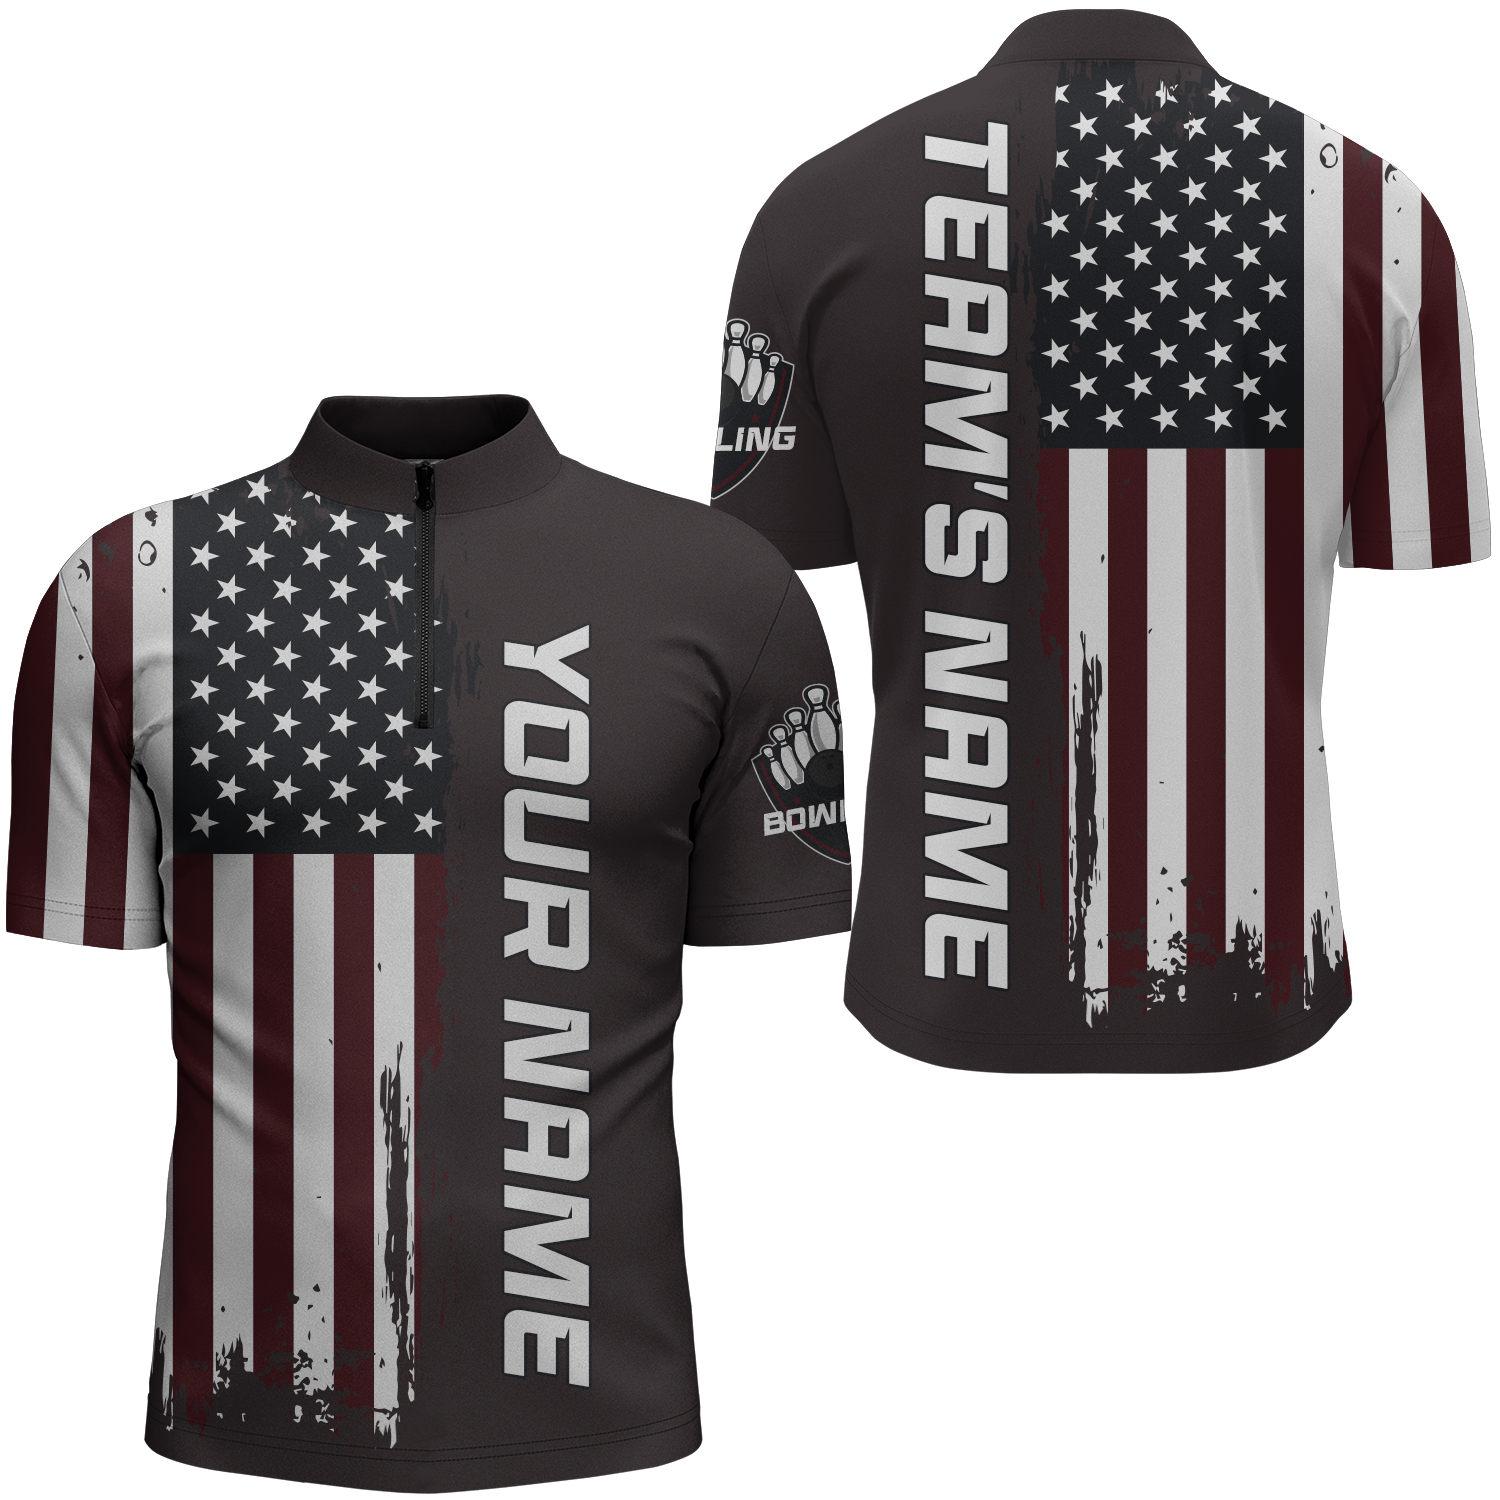 Bowling Customized Jersey Patriotic Shirt American Flag Quarter Zip Bowling Shirt For Men, Women, Bowlers, Bowling Team